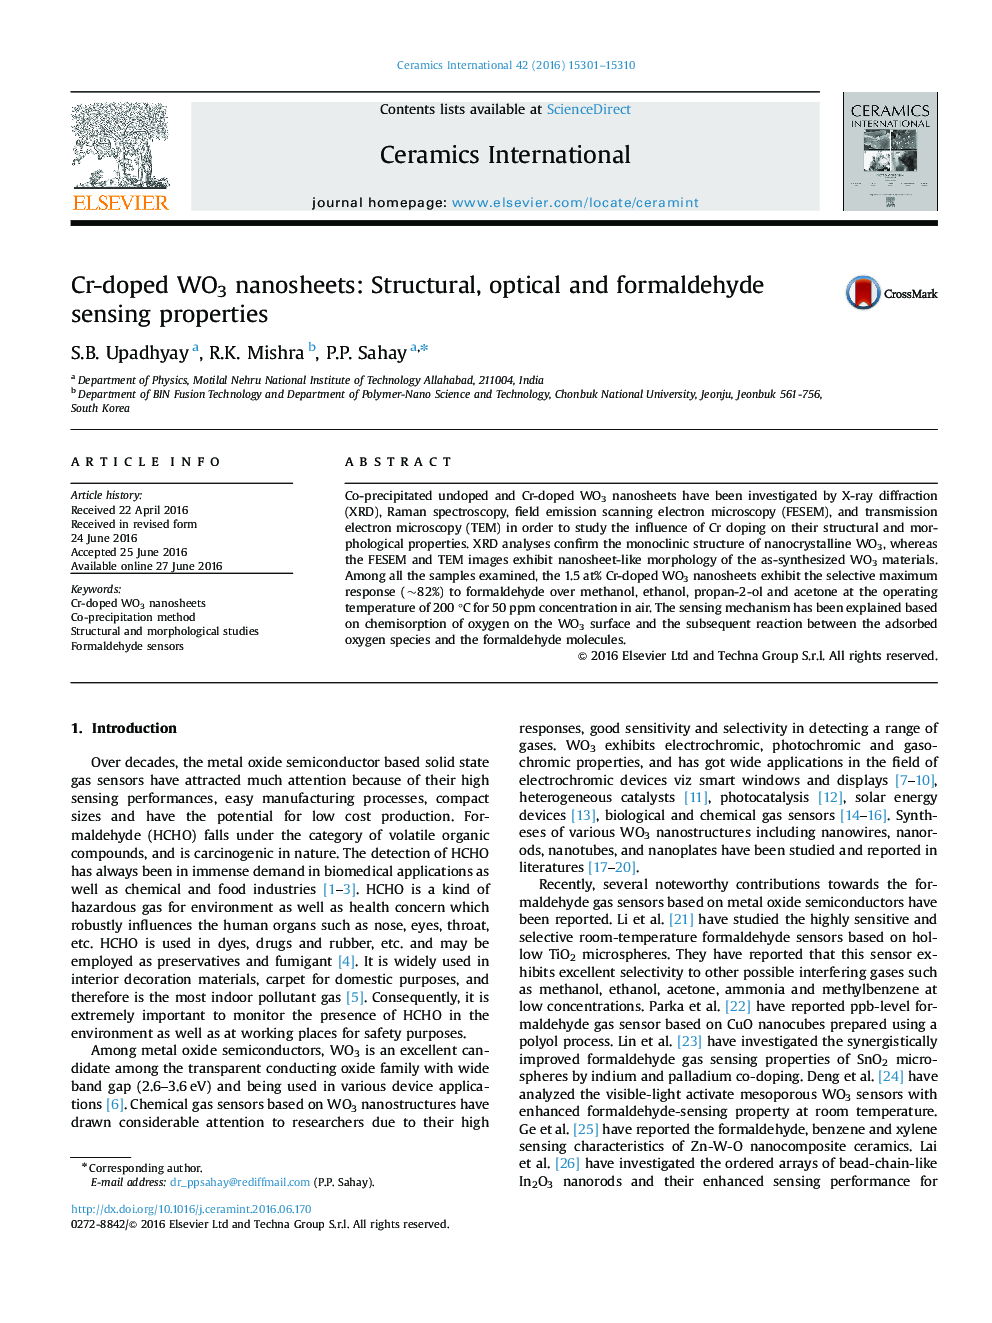 Cr-doped WO3 nanosheets: Structural, optical and formaldehyde sensing properties